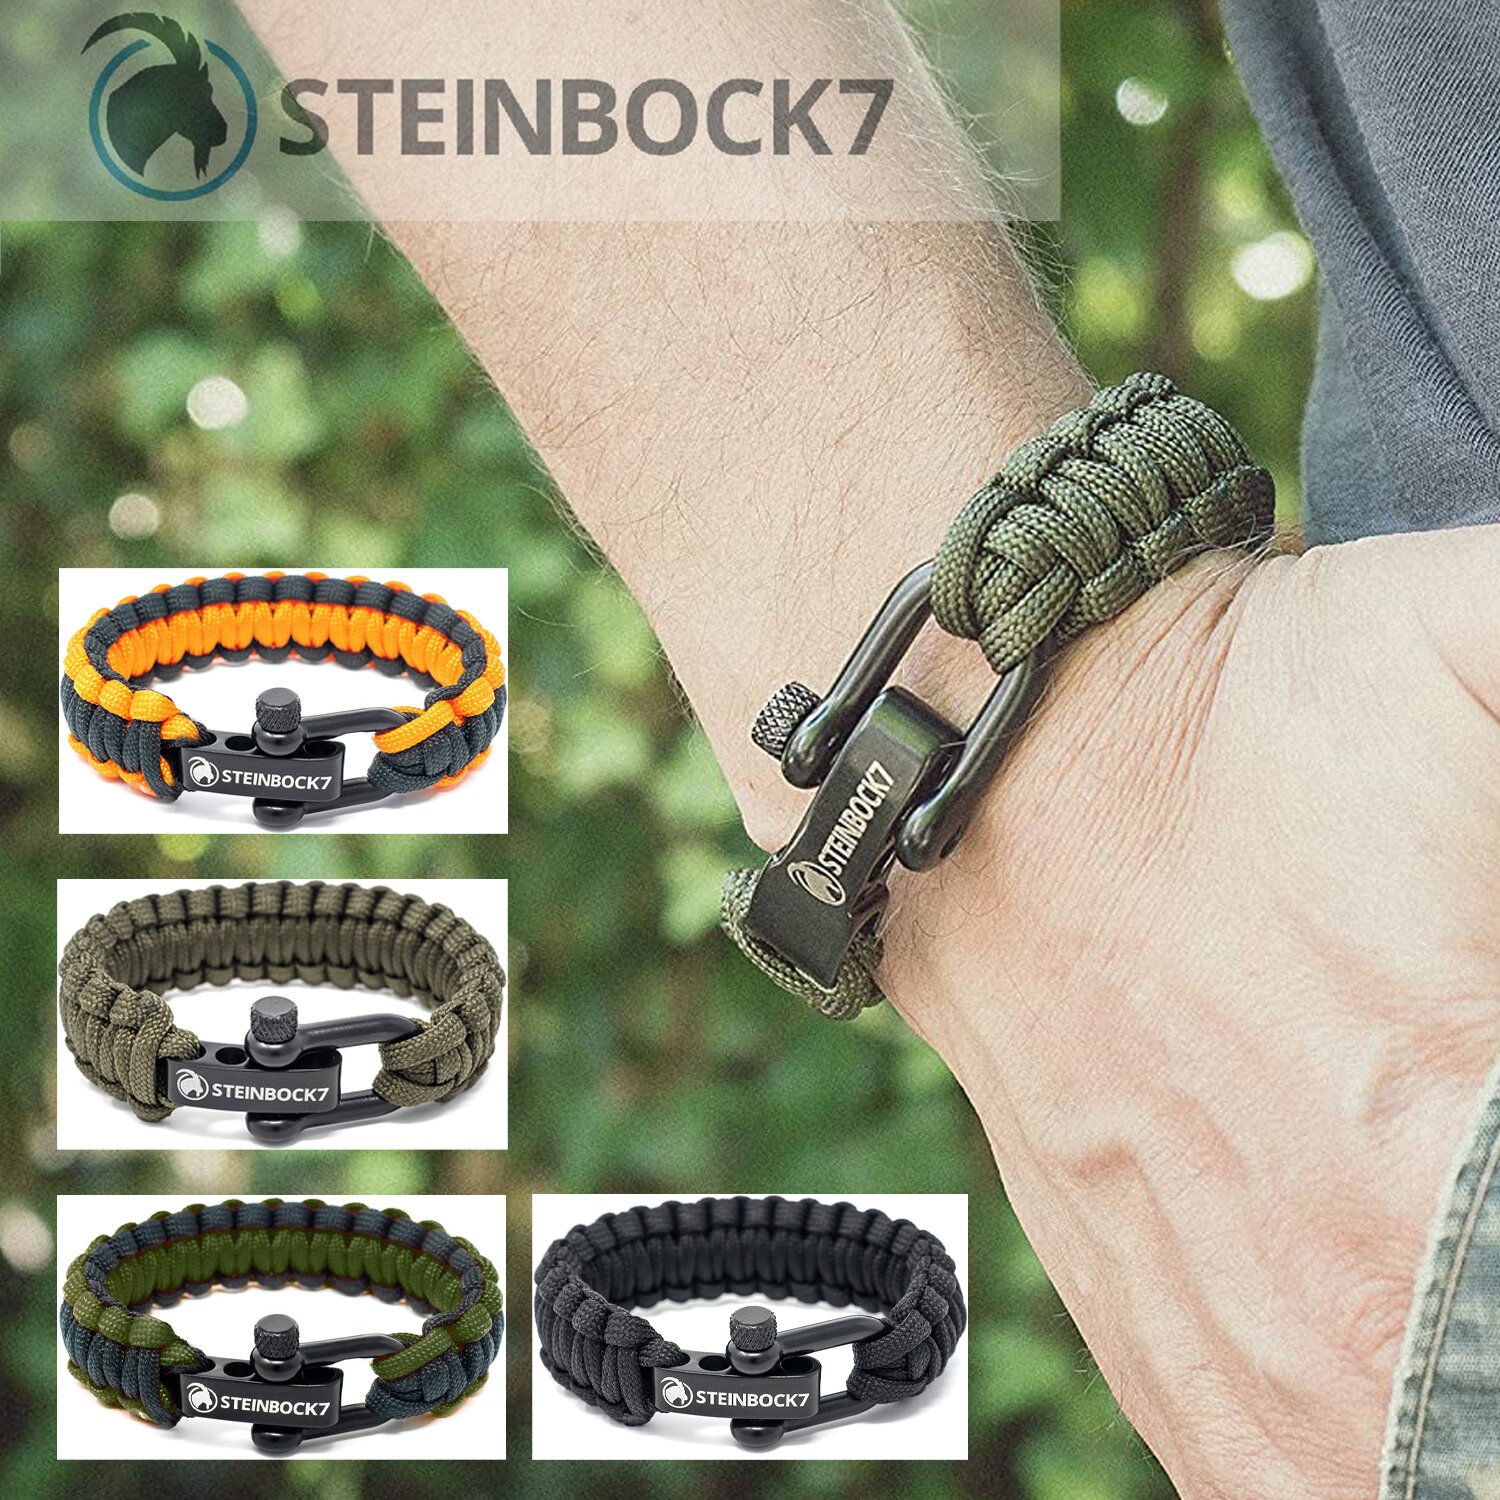 Steinbock7 Survival Paracord Männer Armband 